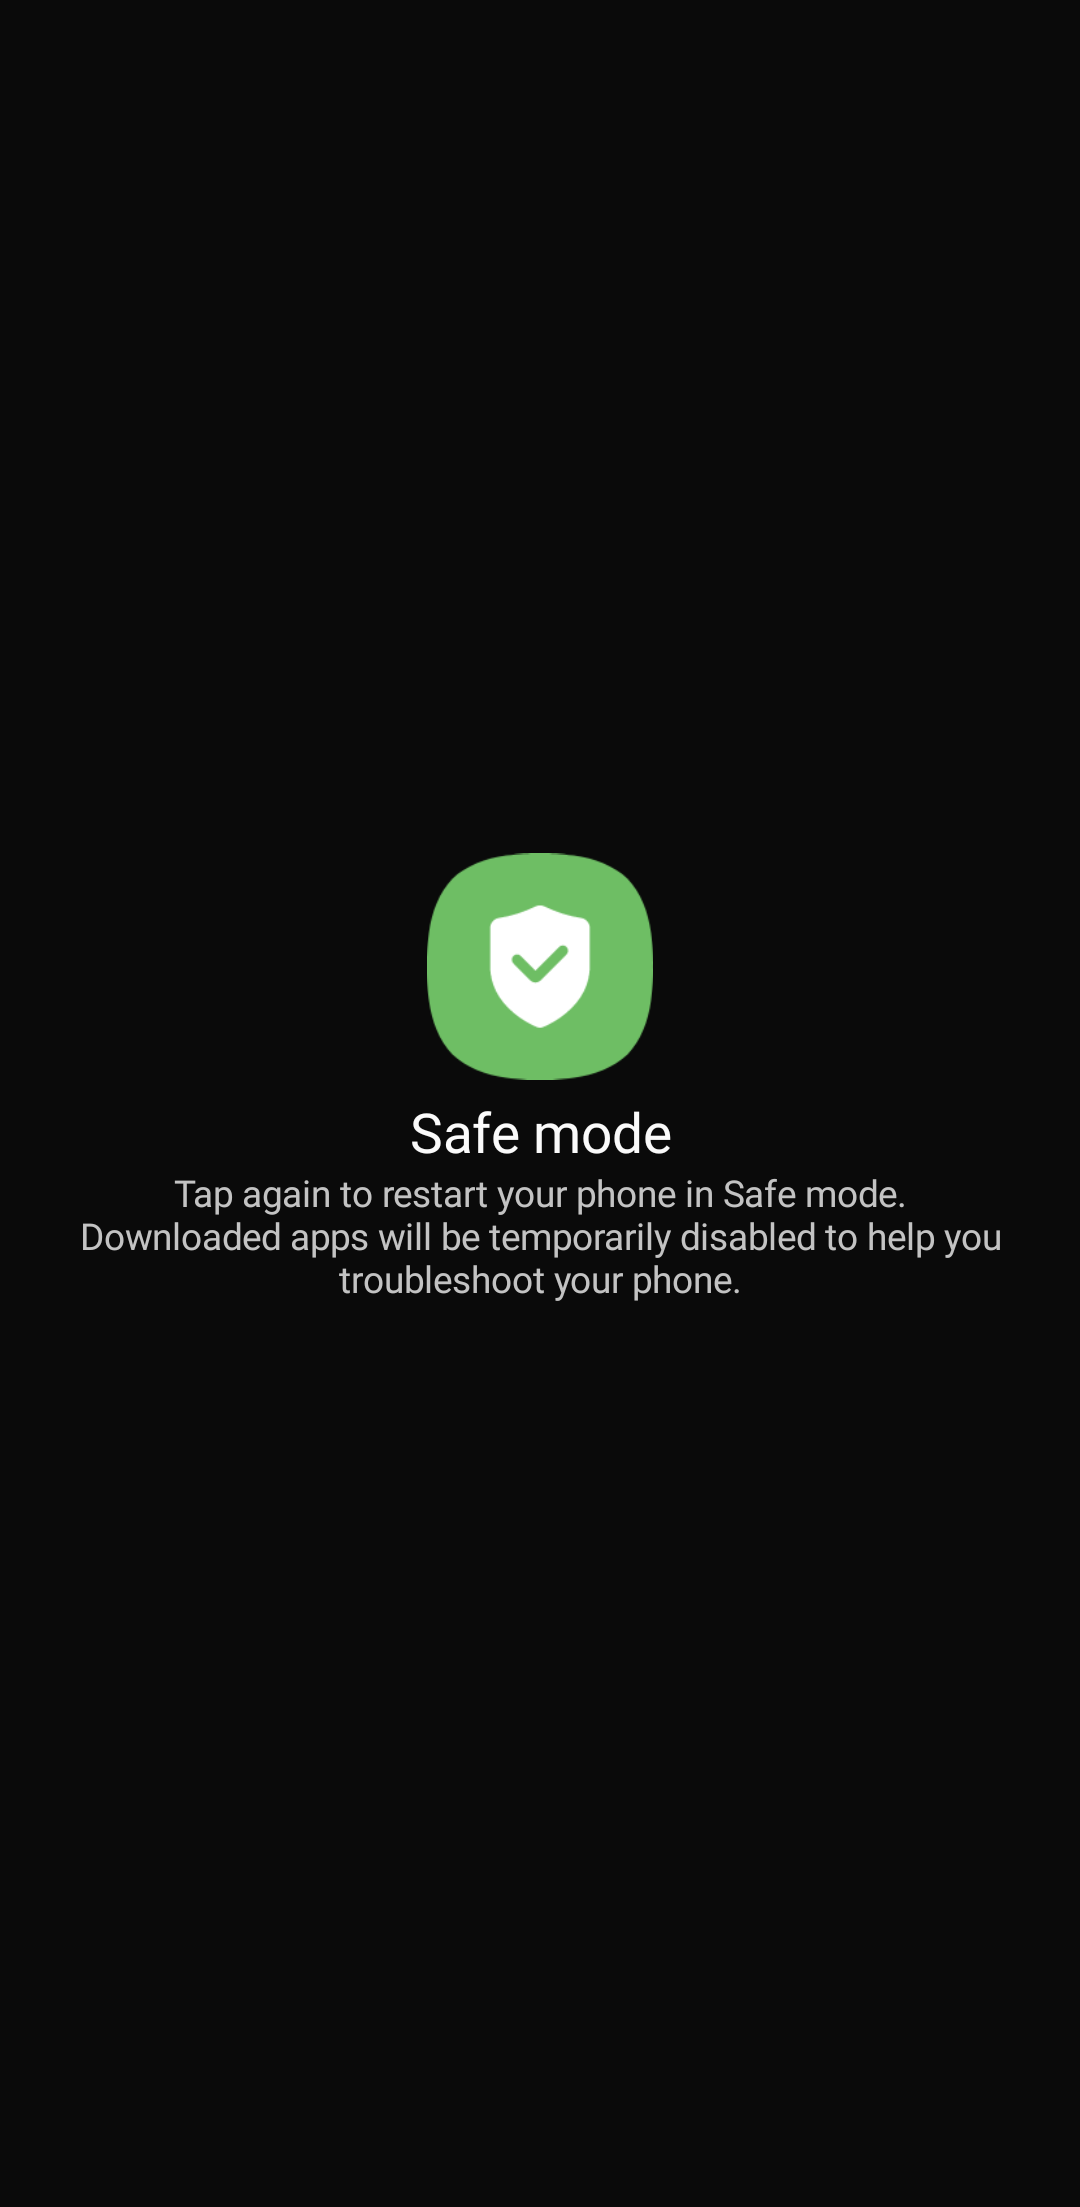 Safe mode restart option on Android phone